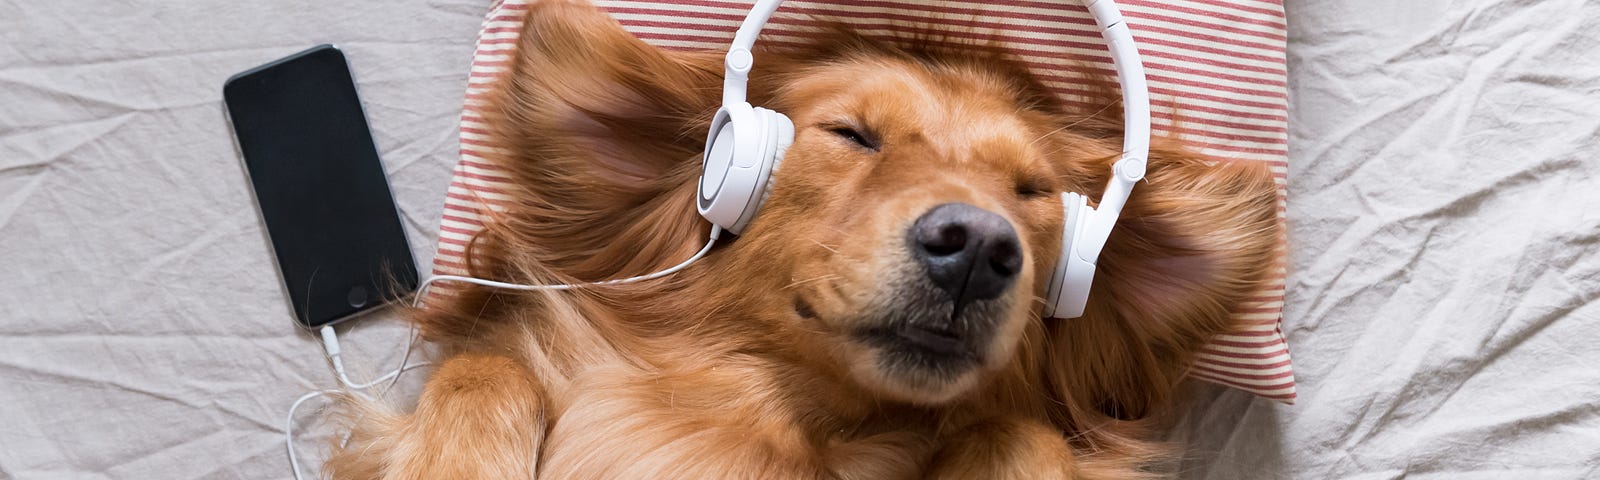 A golden retriever wearing headphones and looking content